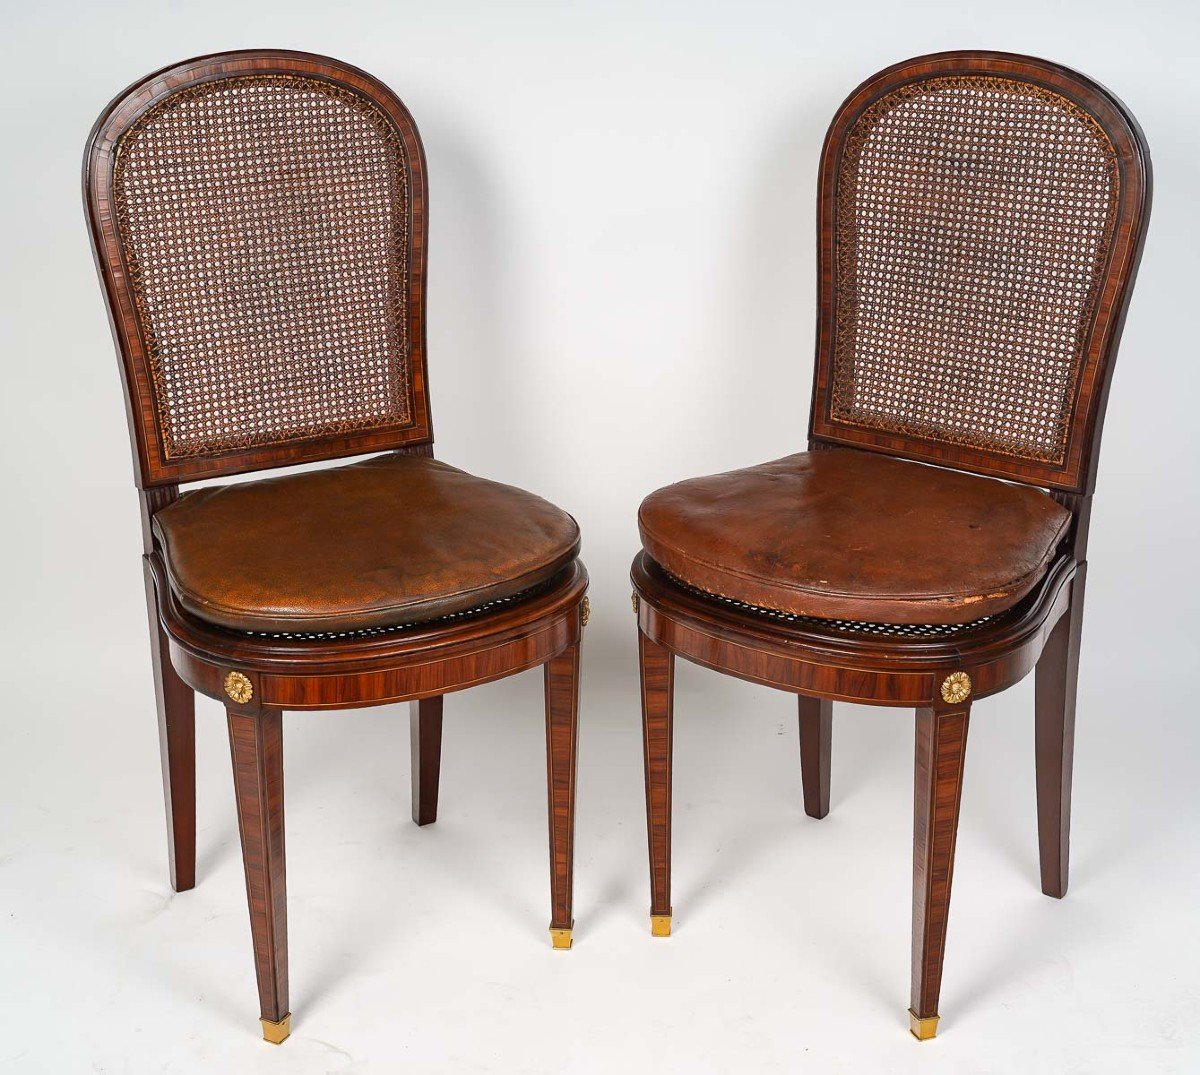 Pair Of XIXth Century Chairs In Louis XVI Style.